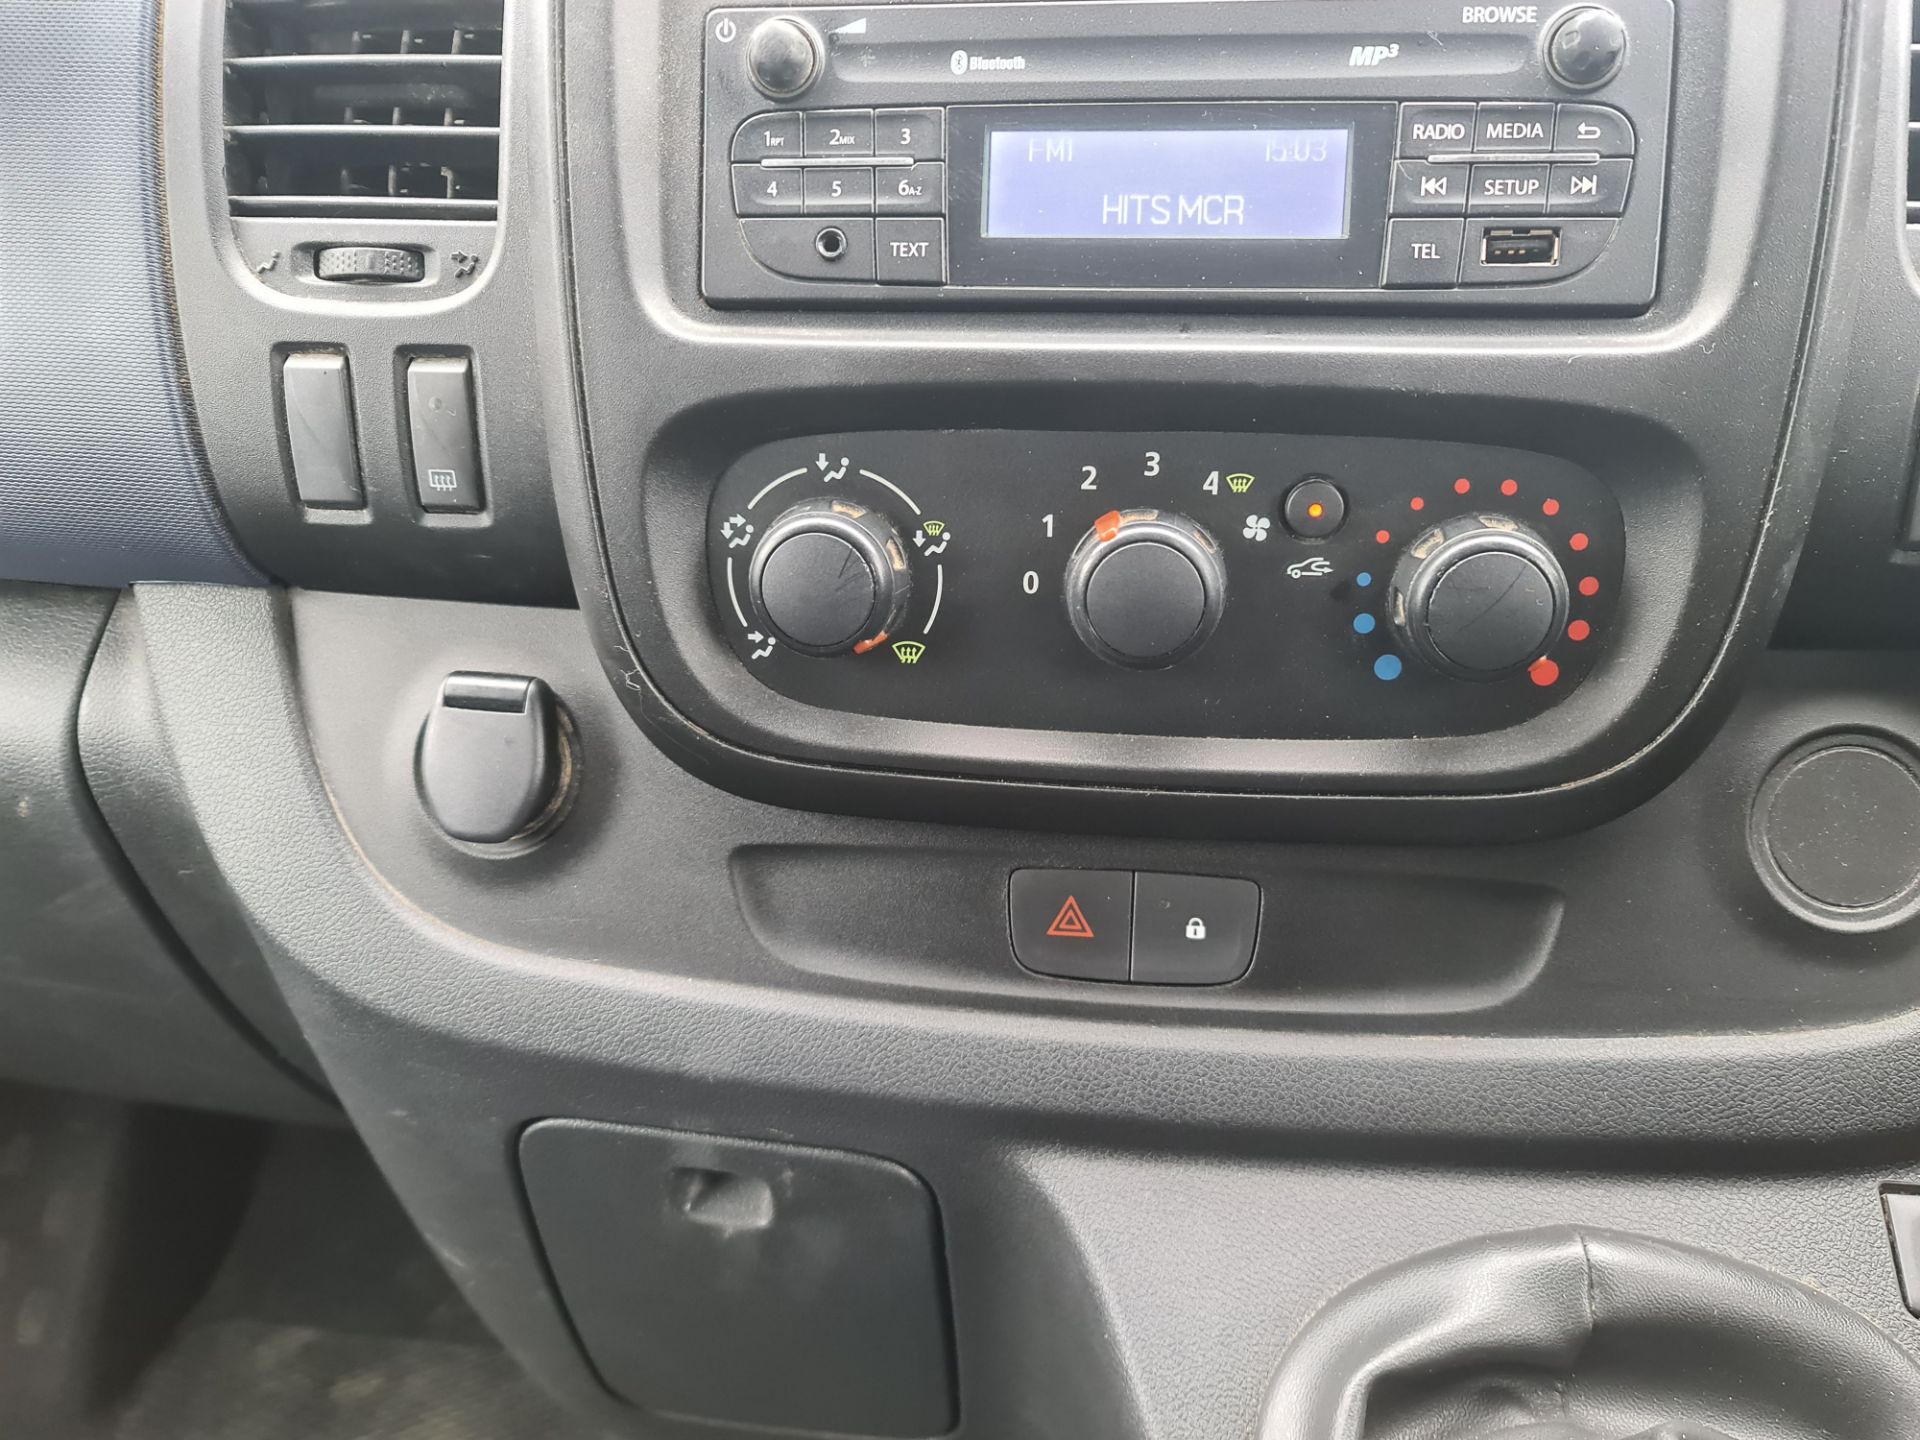 2015 Vauxhall Vivaro 2900 CDTi panel van - Image 64 of 66